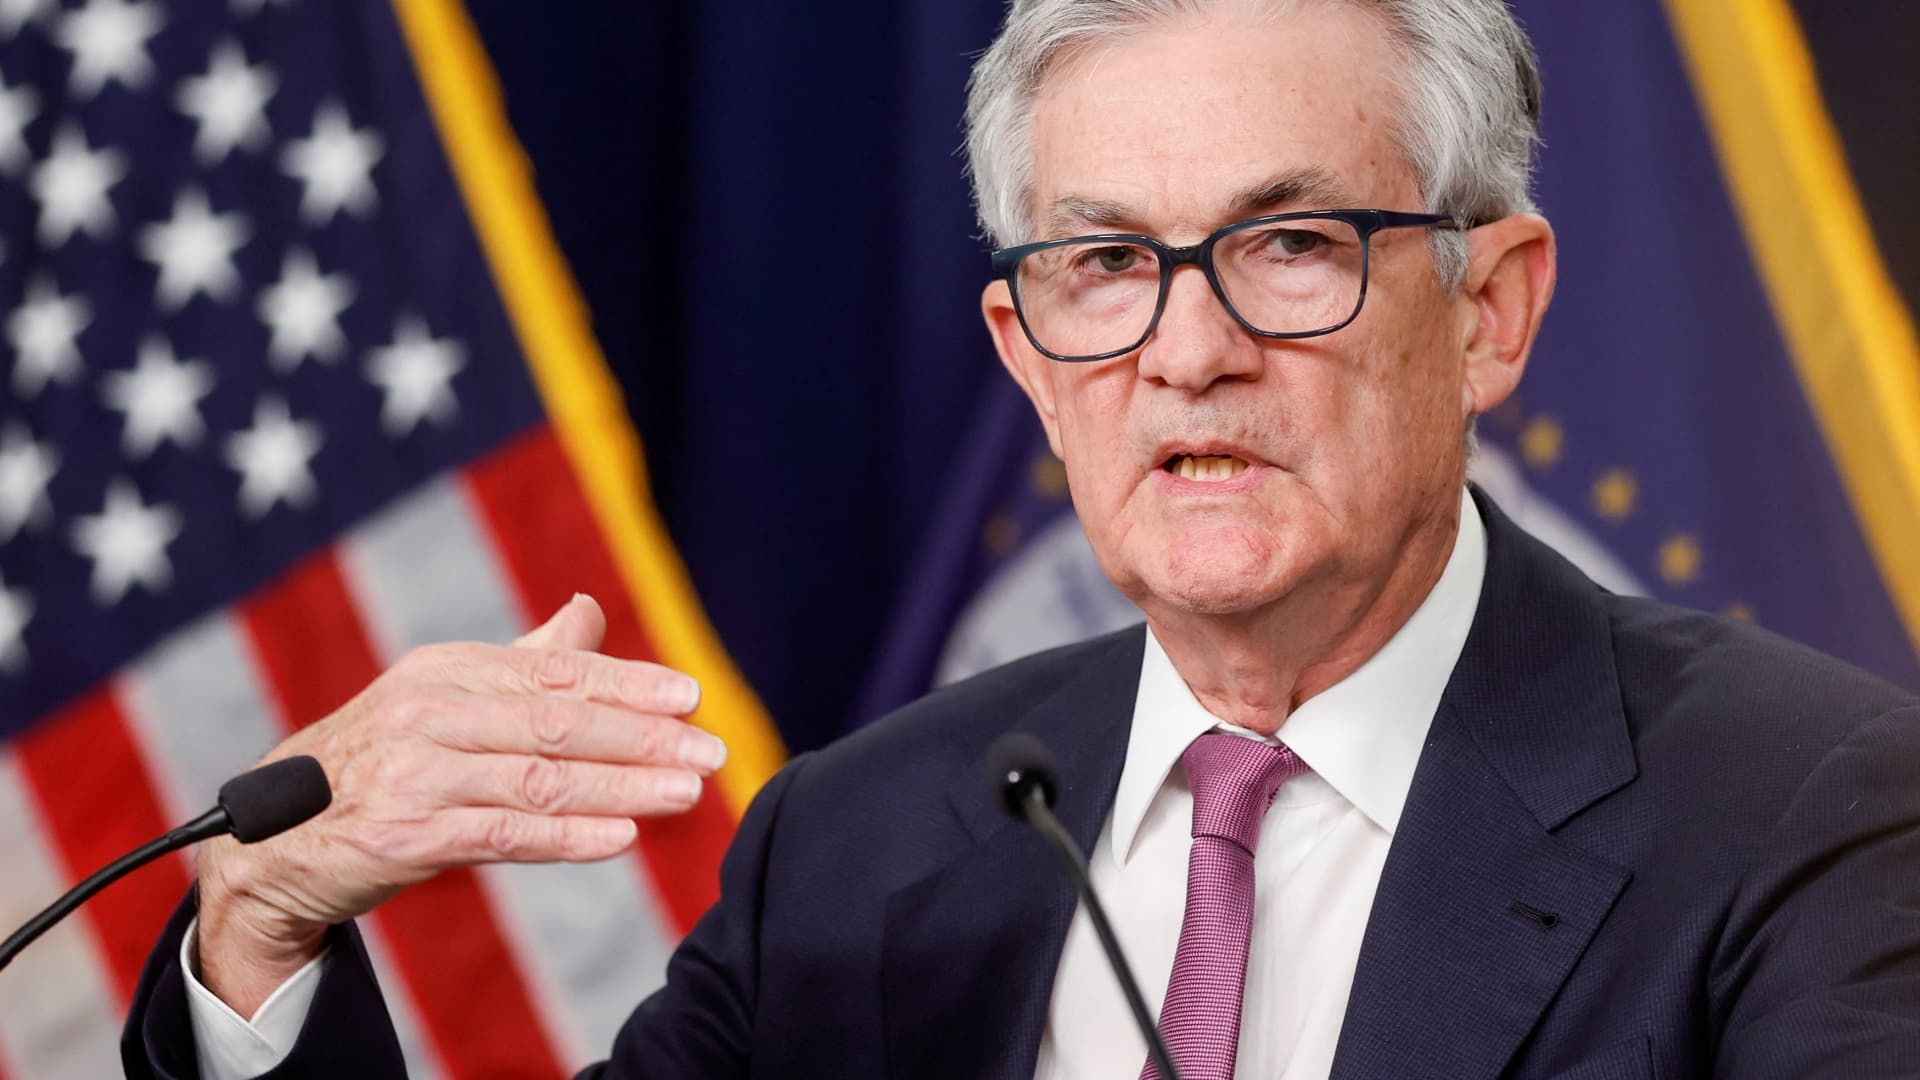 Fed poised for quarter-point rate hike next week, despite turmoil